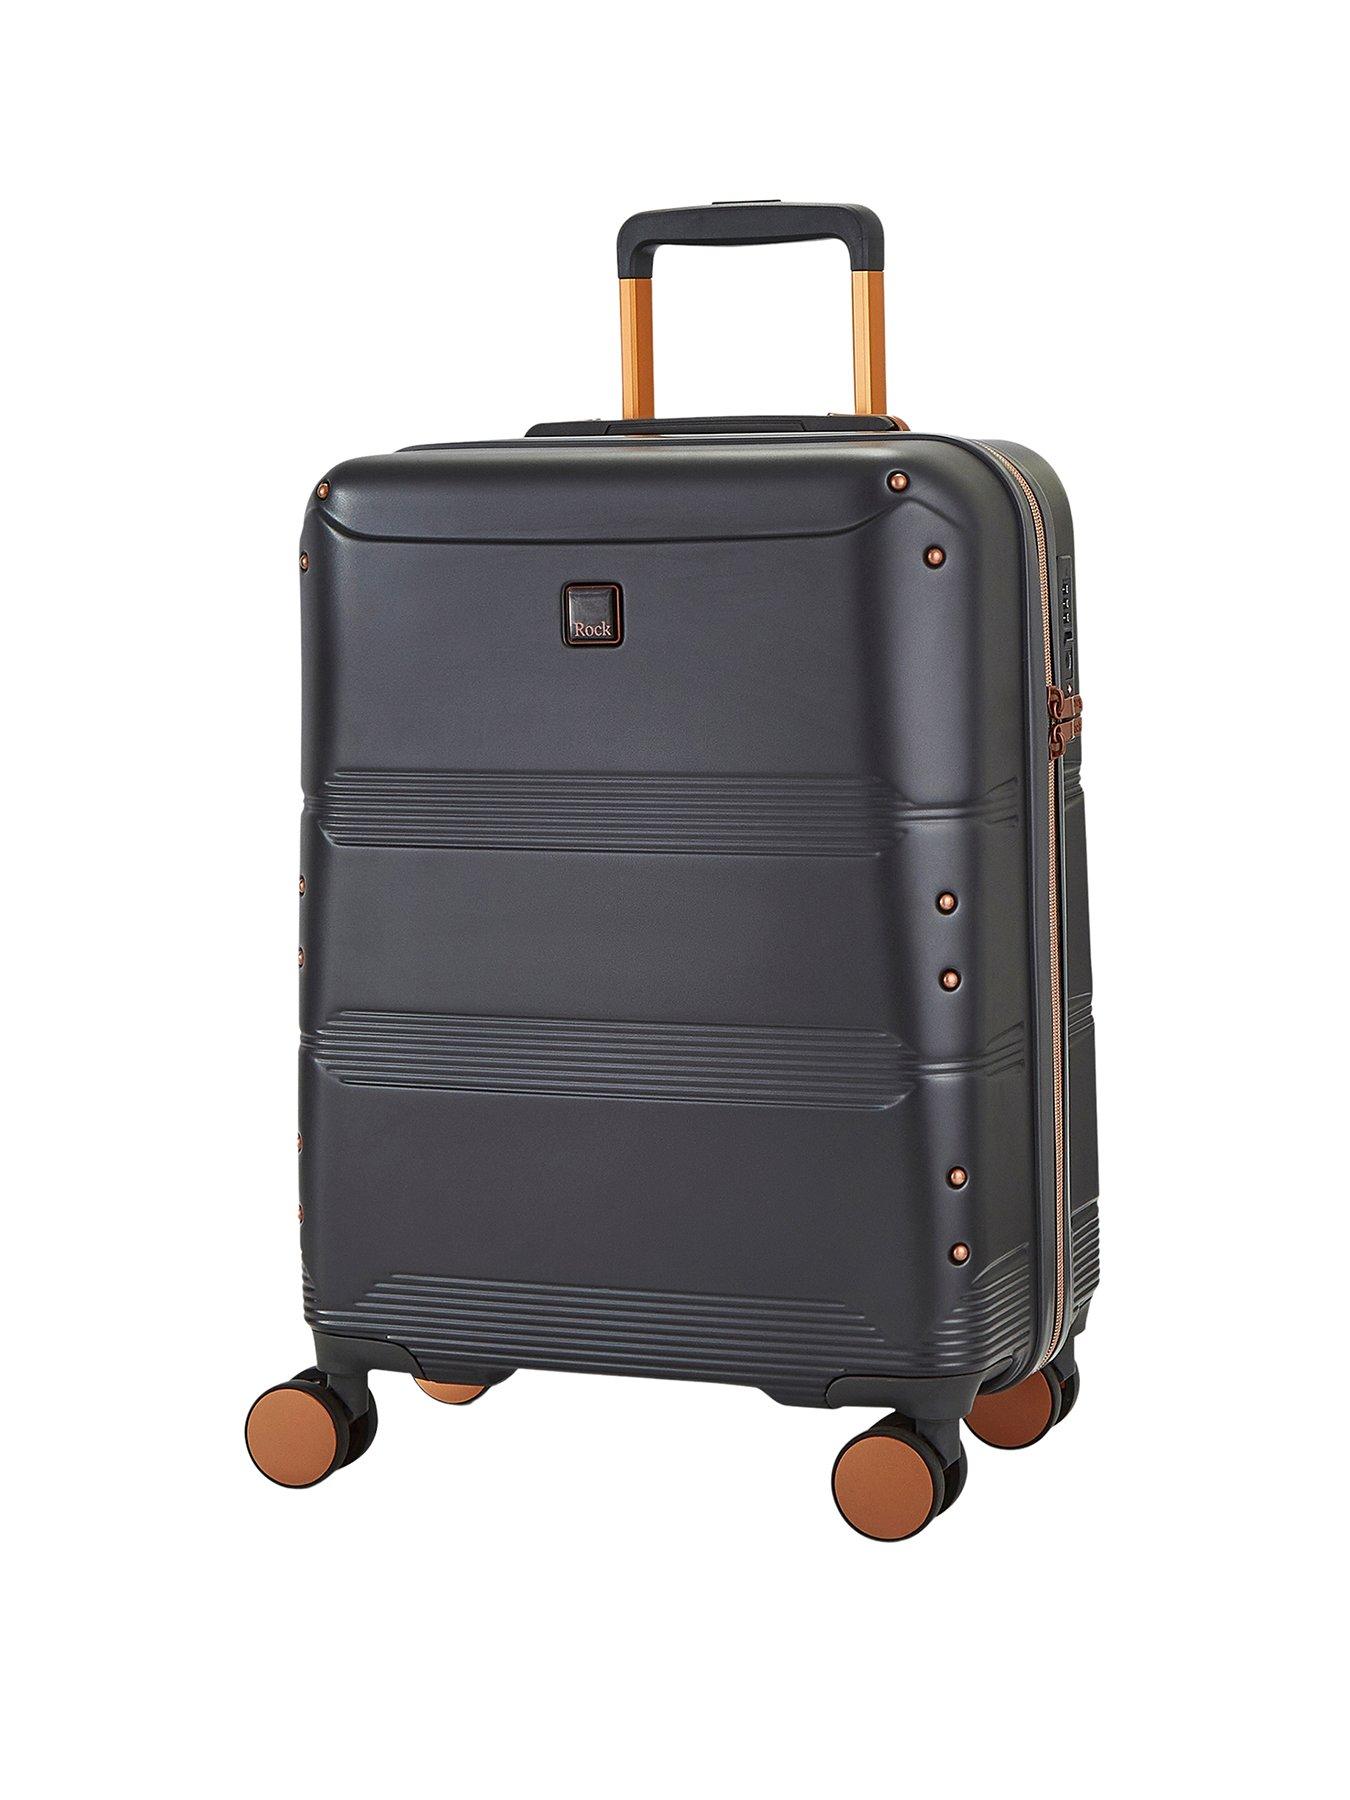 Rock Luggage Mayfair 8 Wheel Hardshell Cabin Suitcase - Black | very.co.uk